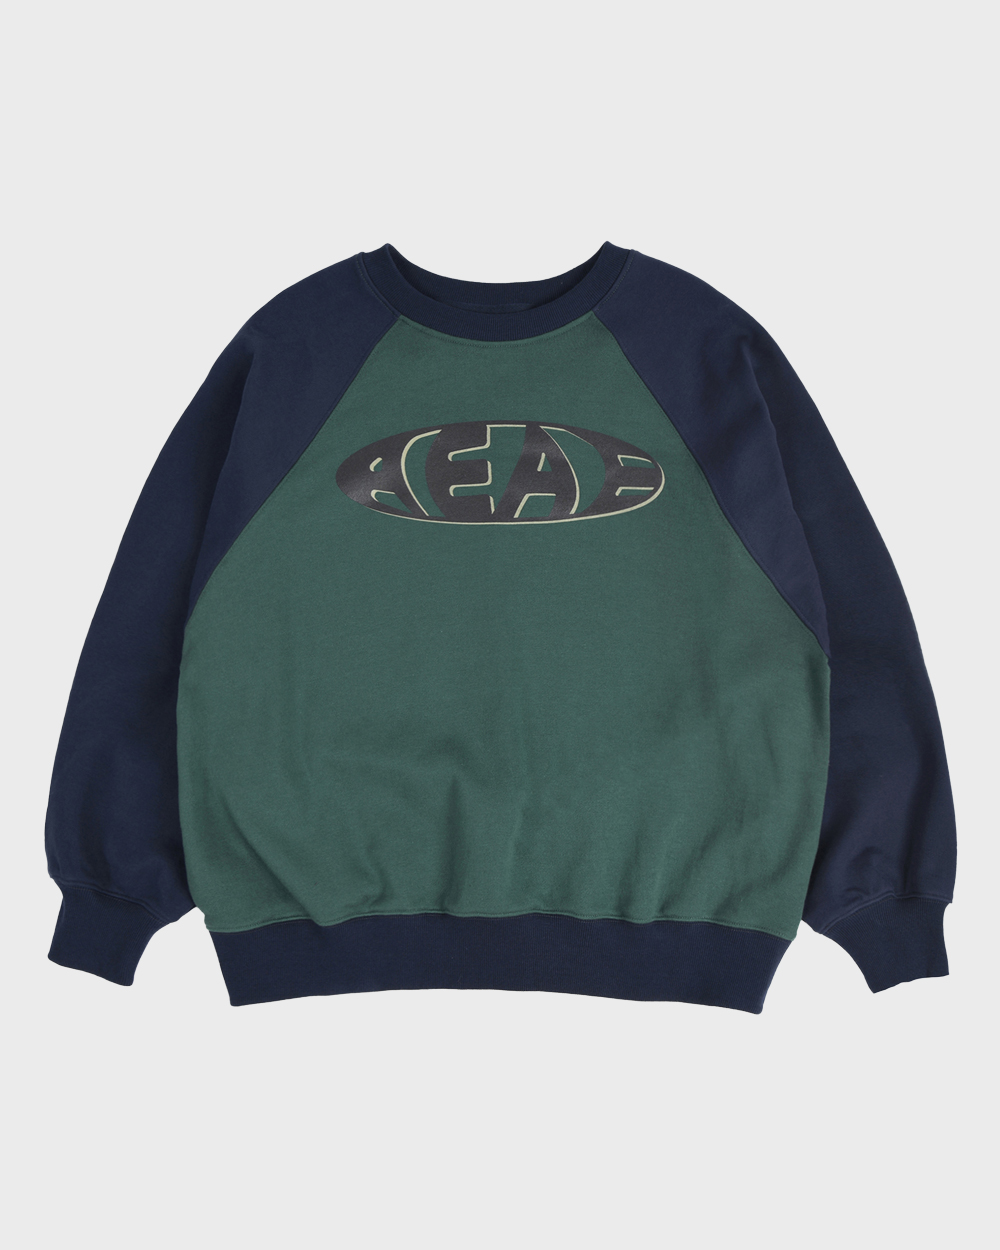 Vintage Logo Raglan Sweatshirts (Navy/Green)